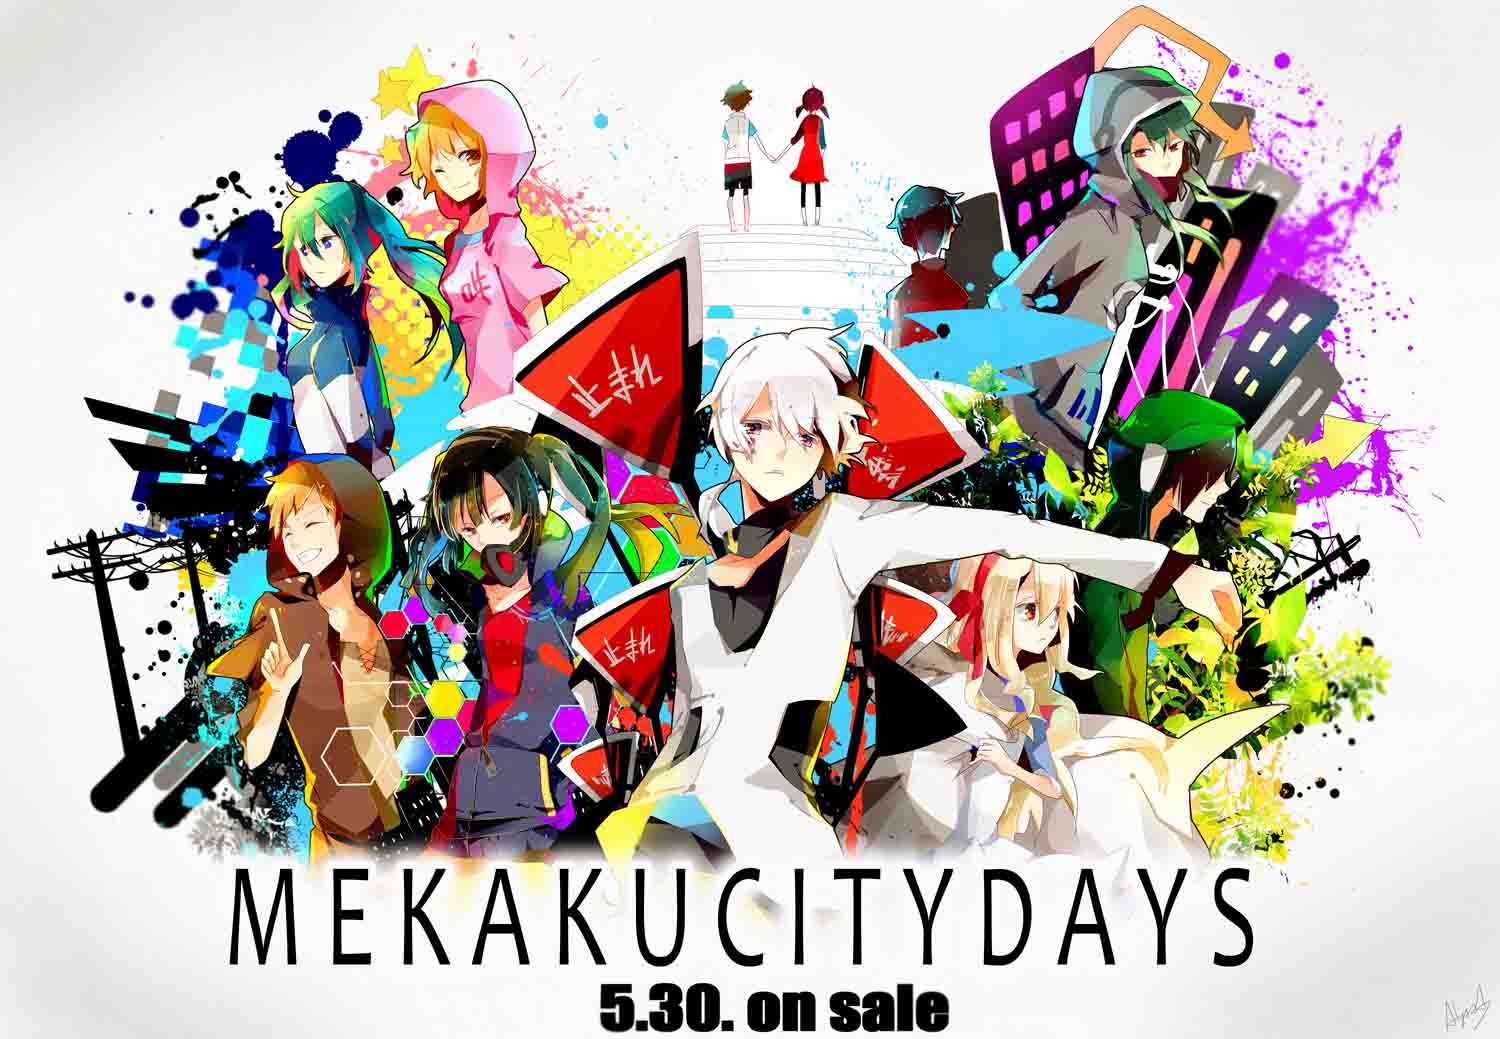 Mekakucity Actors, Kagerou Project Wiki